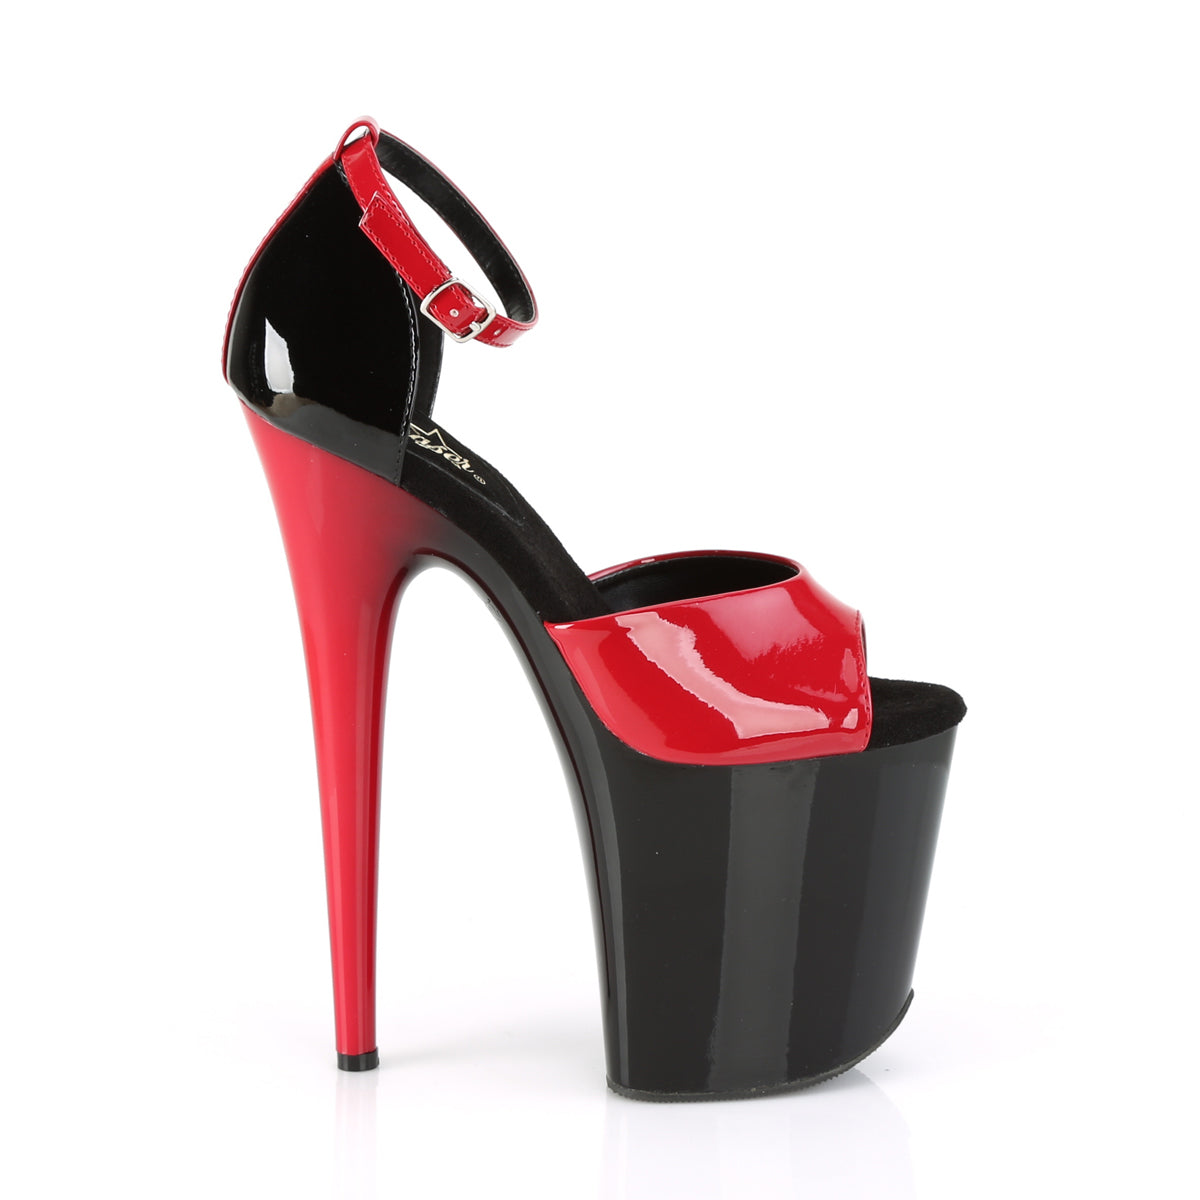 FLAMINGO-889 Black & Red Ankle Peep Toe High Heel